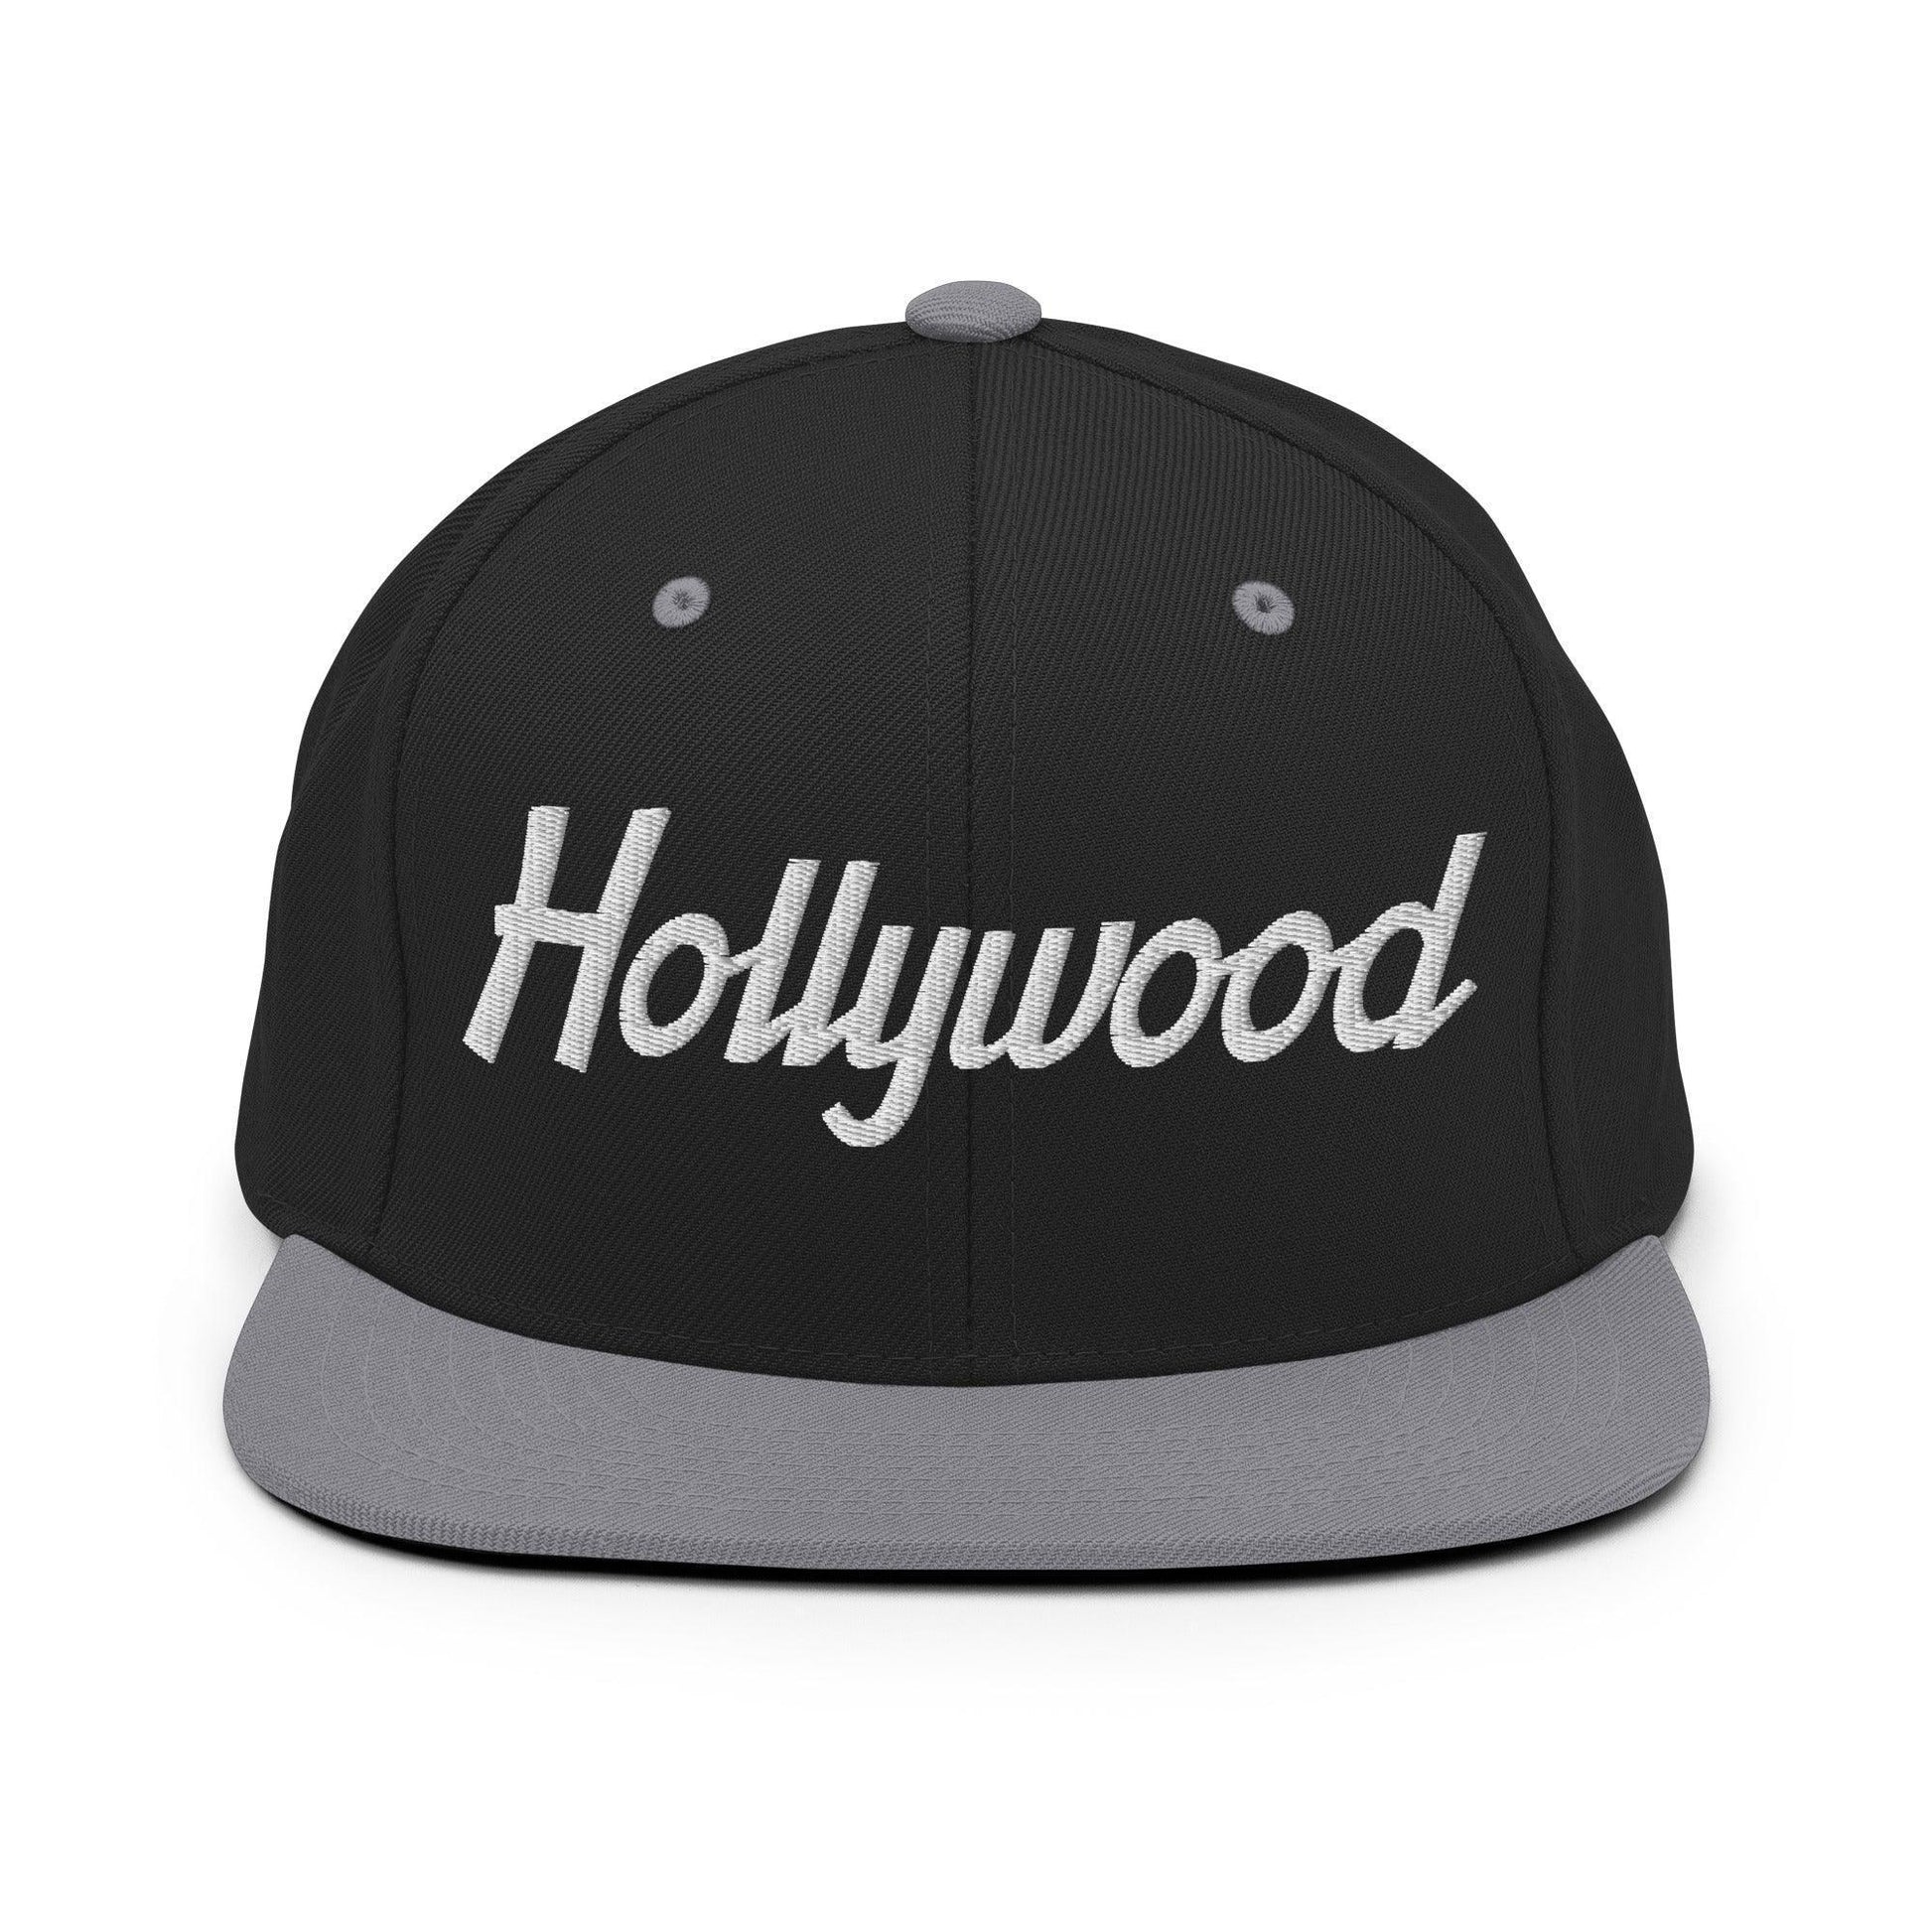 Hollywood Script Snapback Hat Black/ Silver